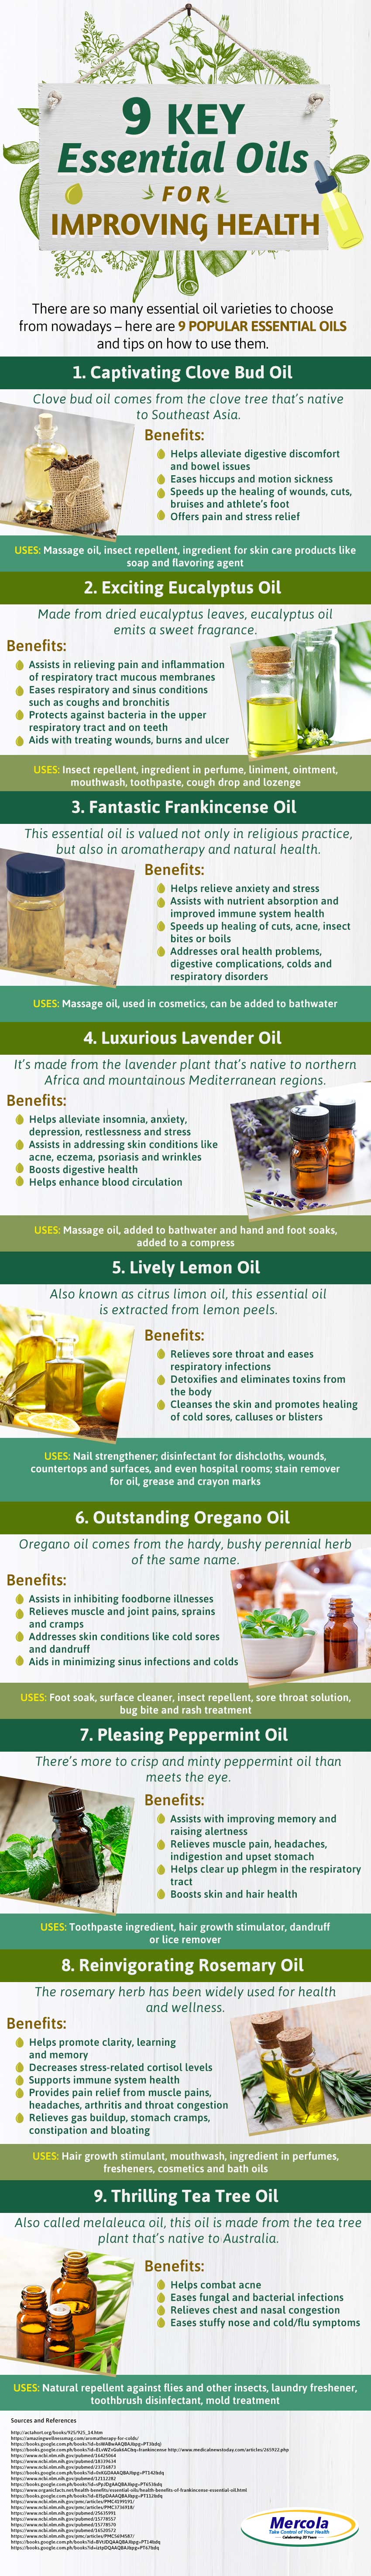 9 Key Essential Oils For Improving Health